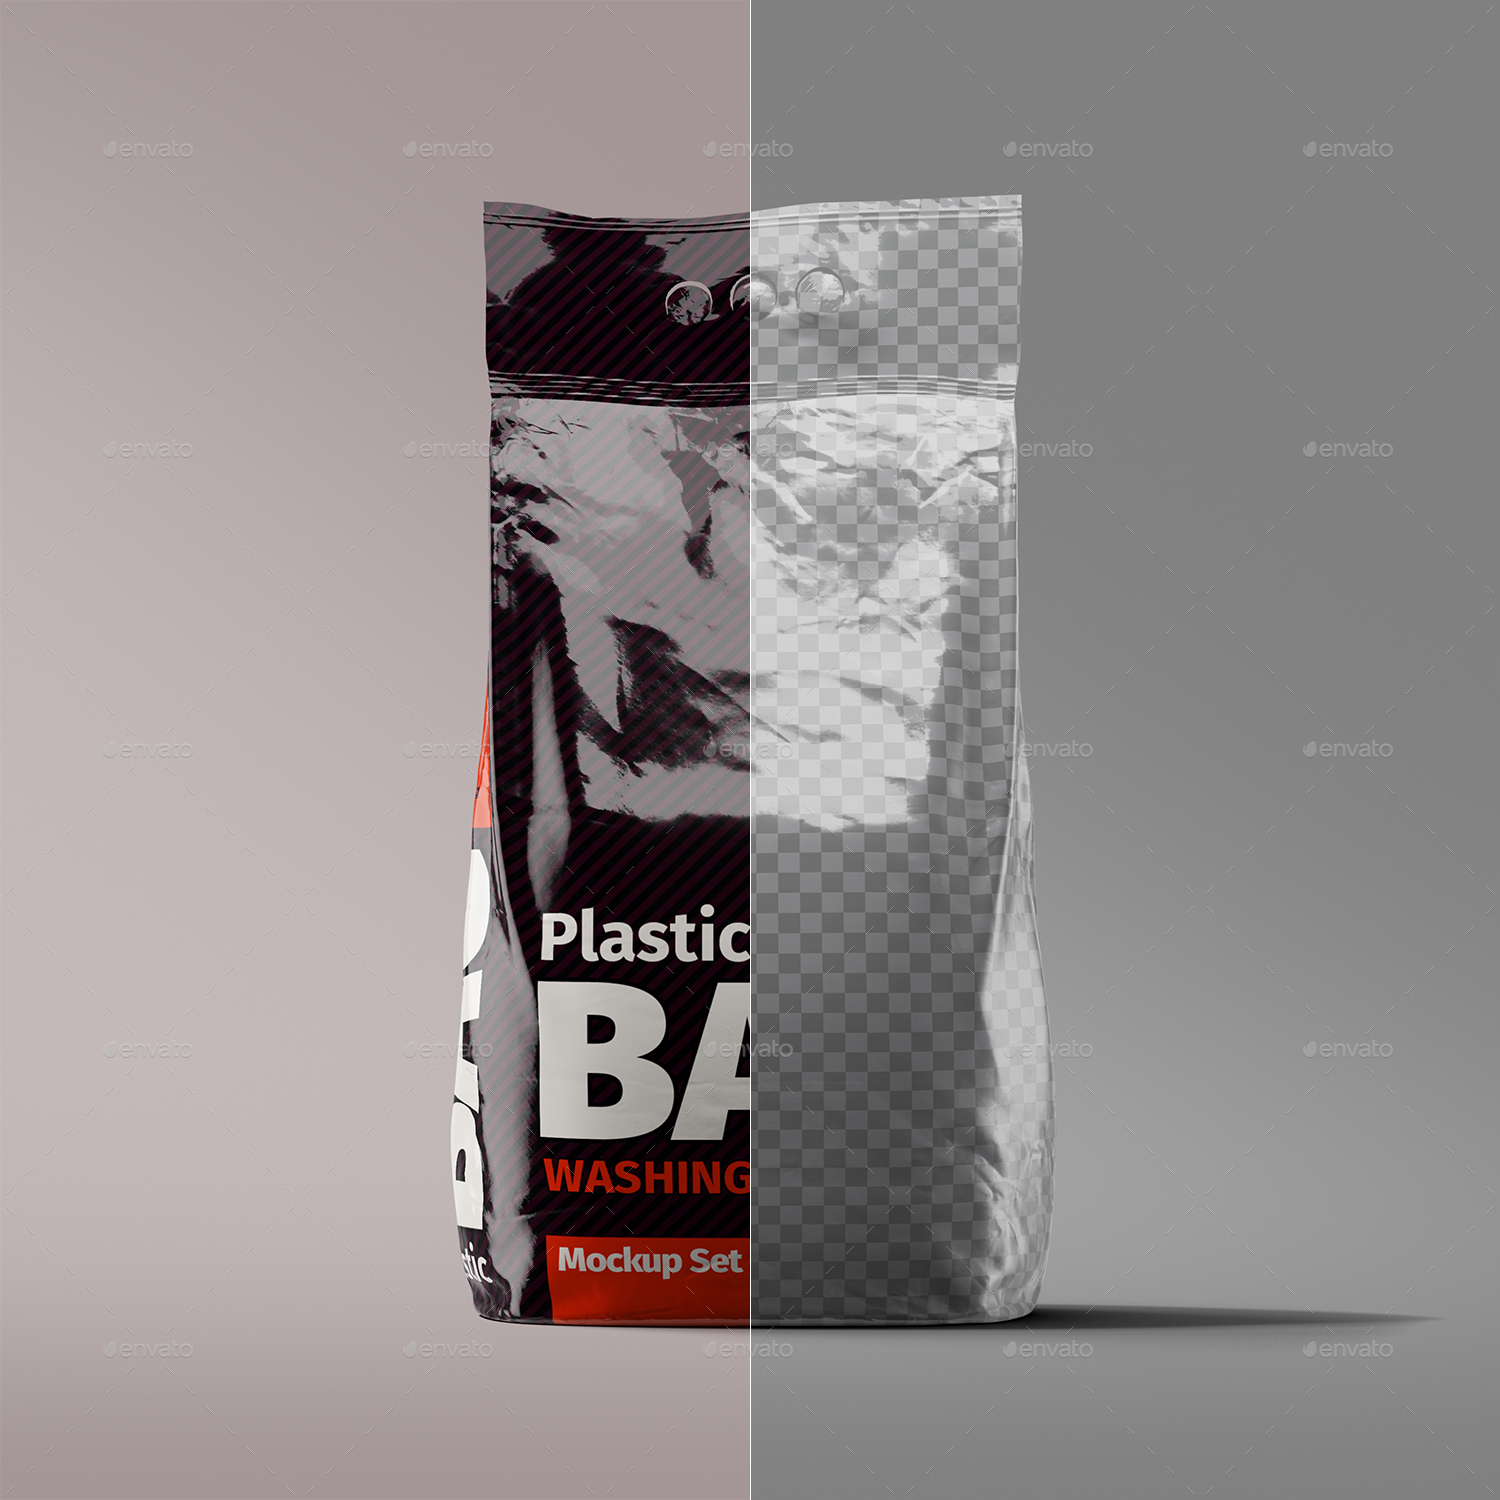 Download Plastic Bag Washing Powder Mockup Set by Radetzki | GraphicRiver